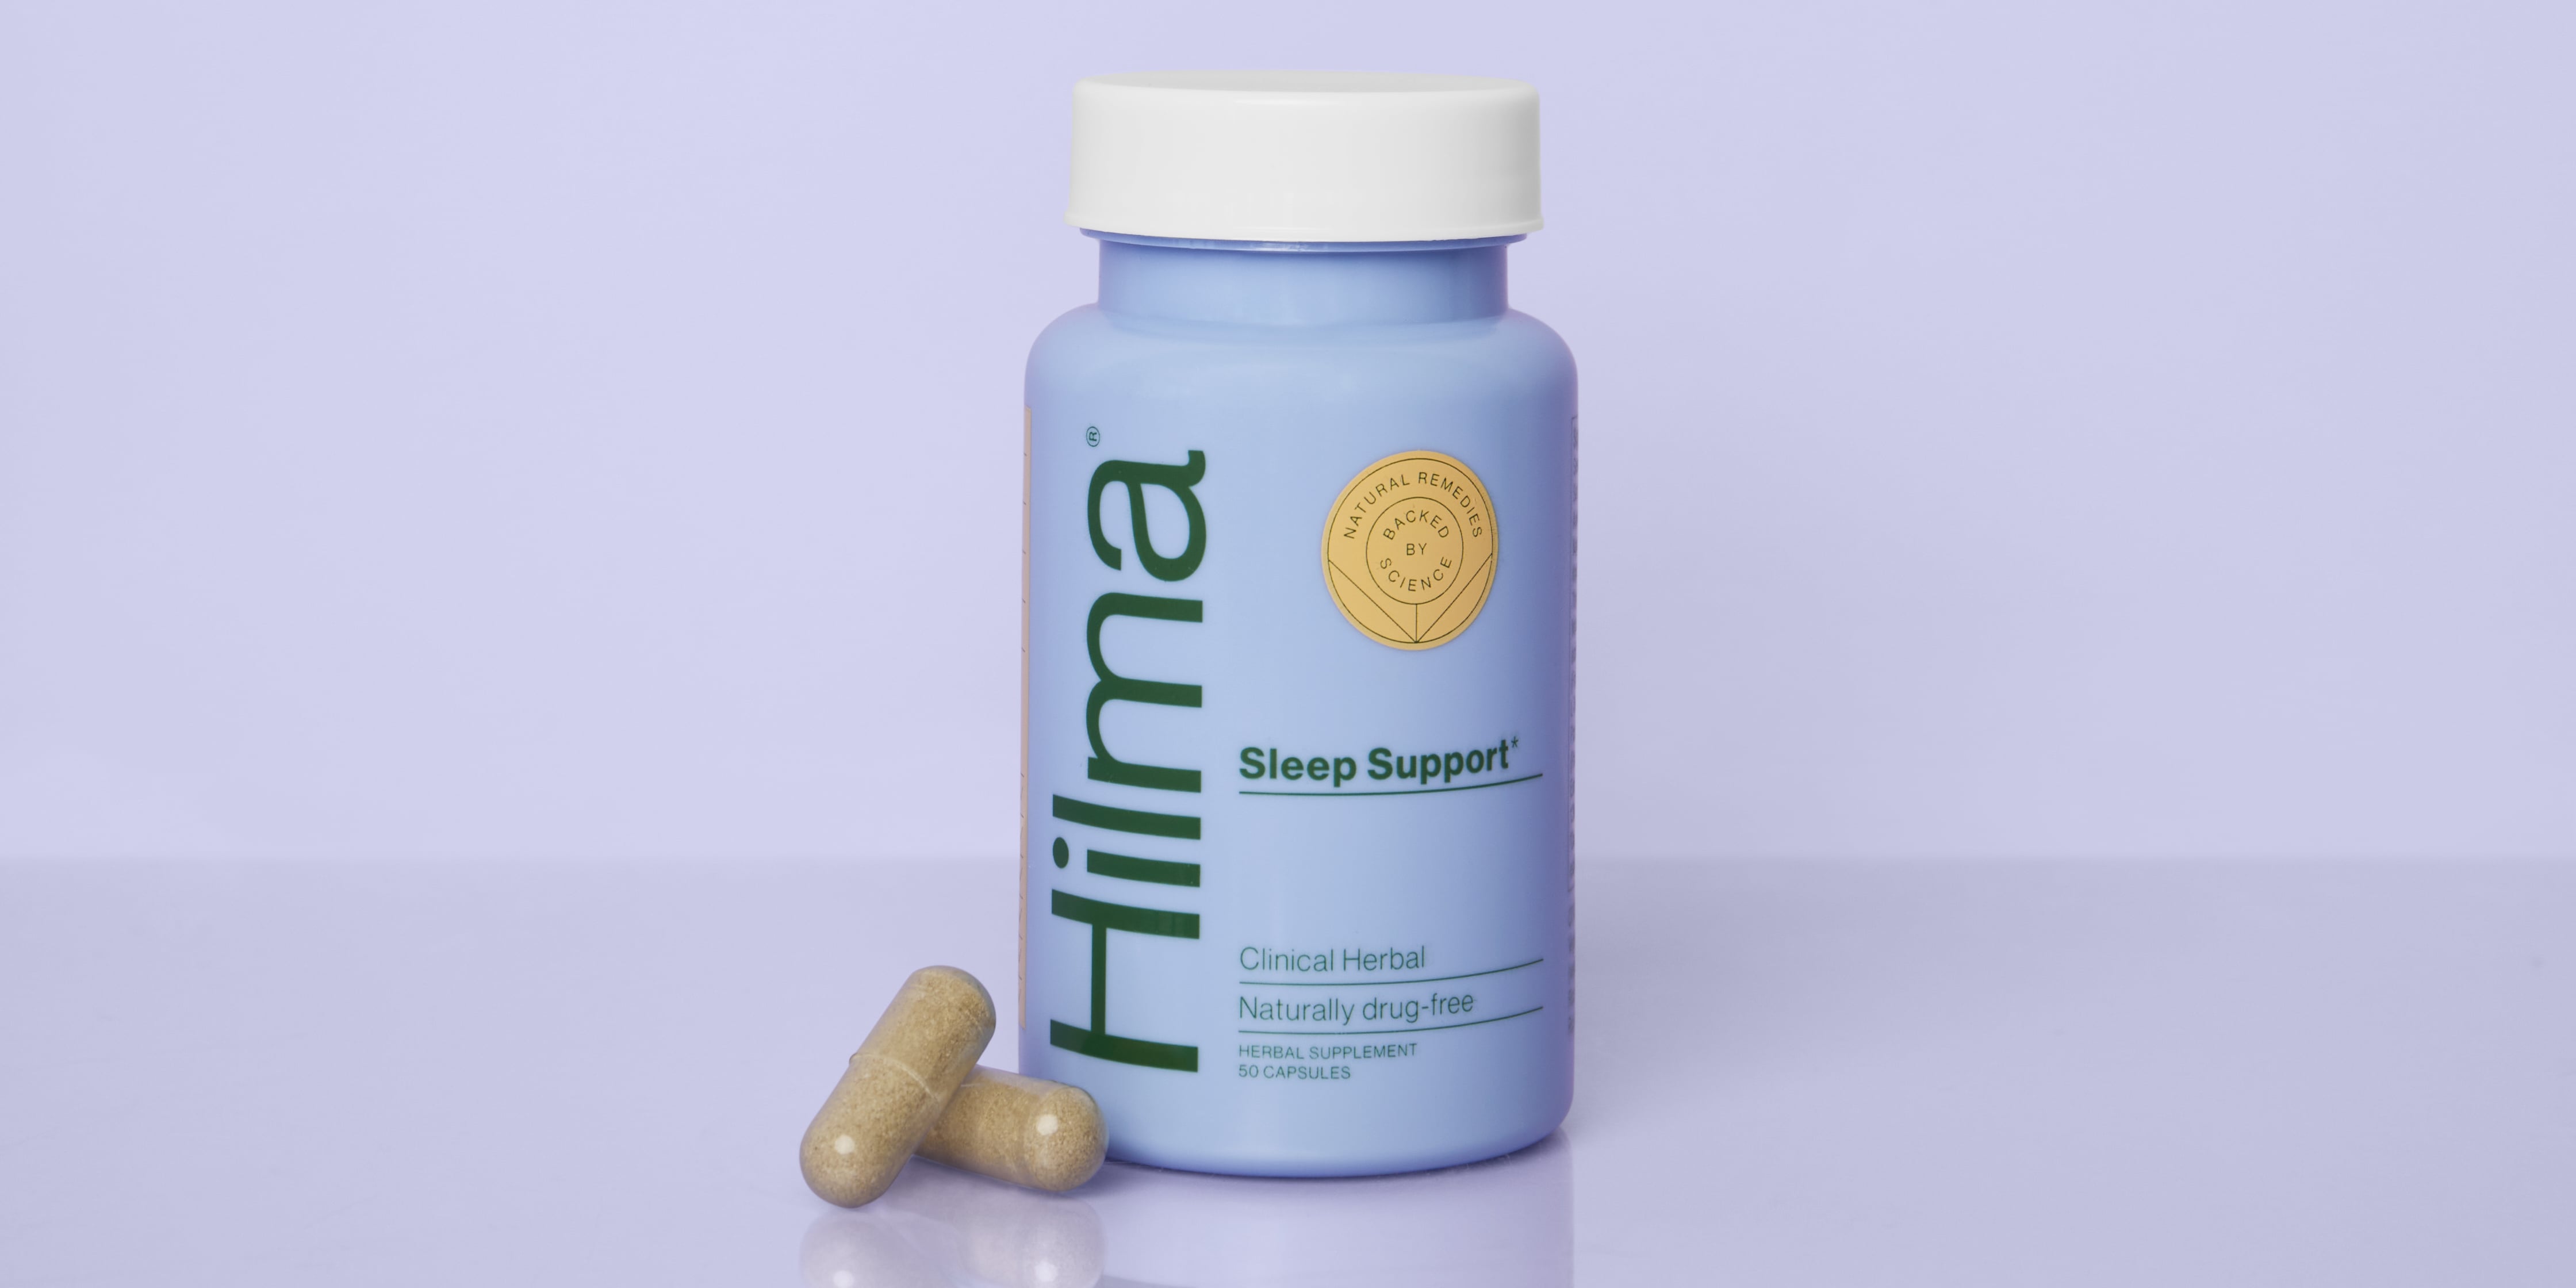 Sleep support supplements